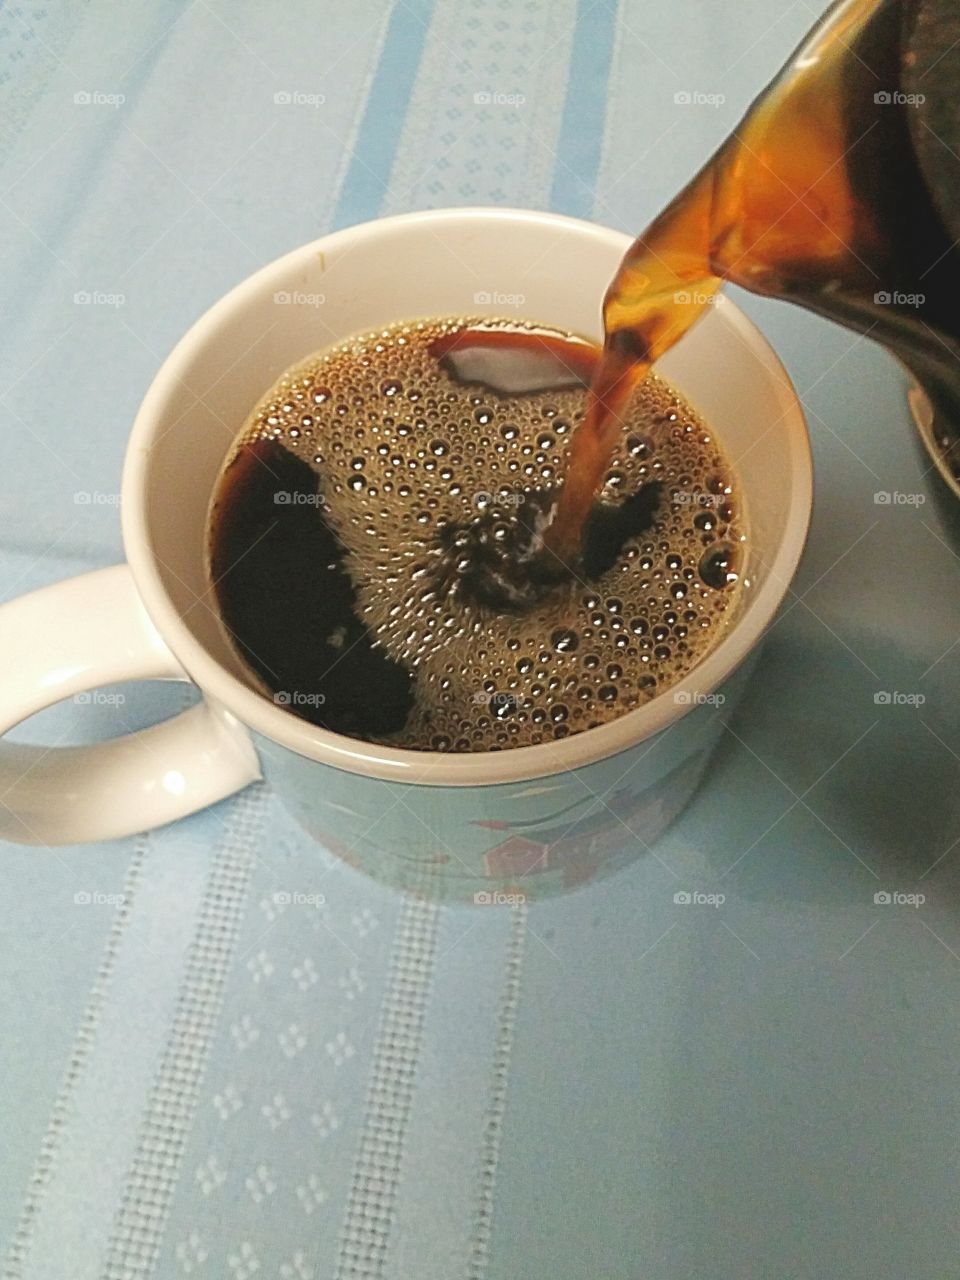 Coffee, black please